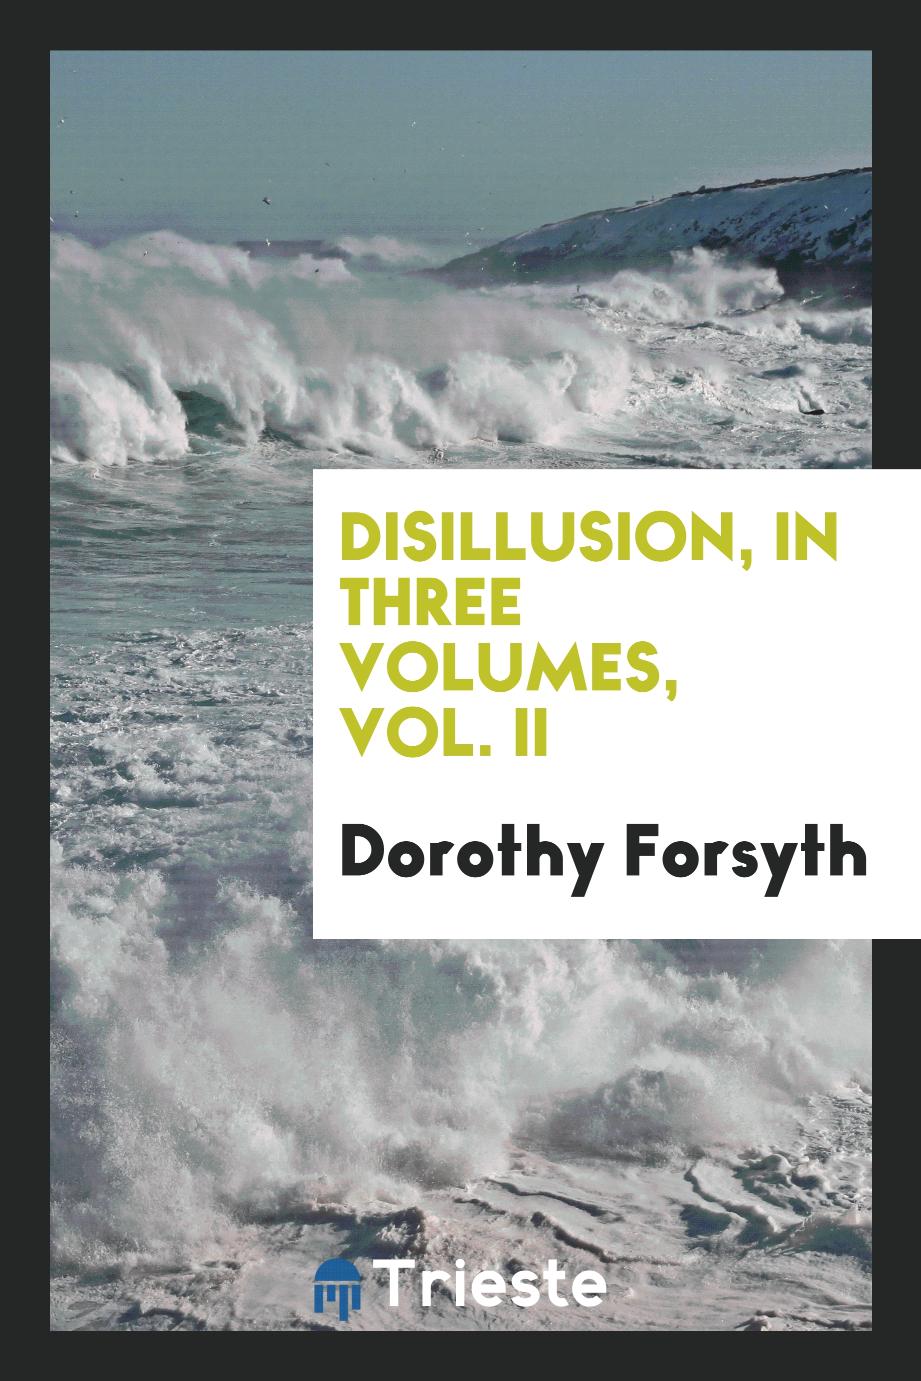 Disillusion, in three volumes, Vol. II